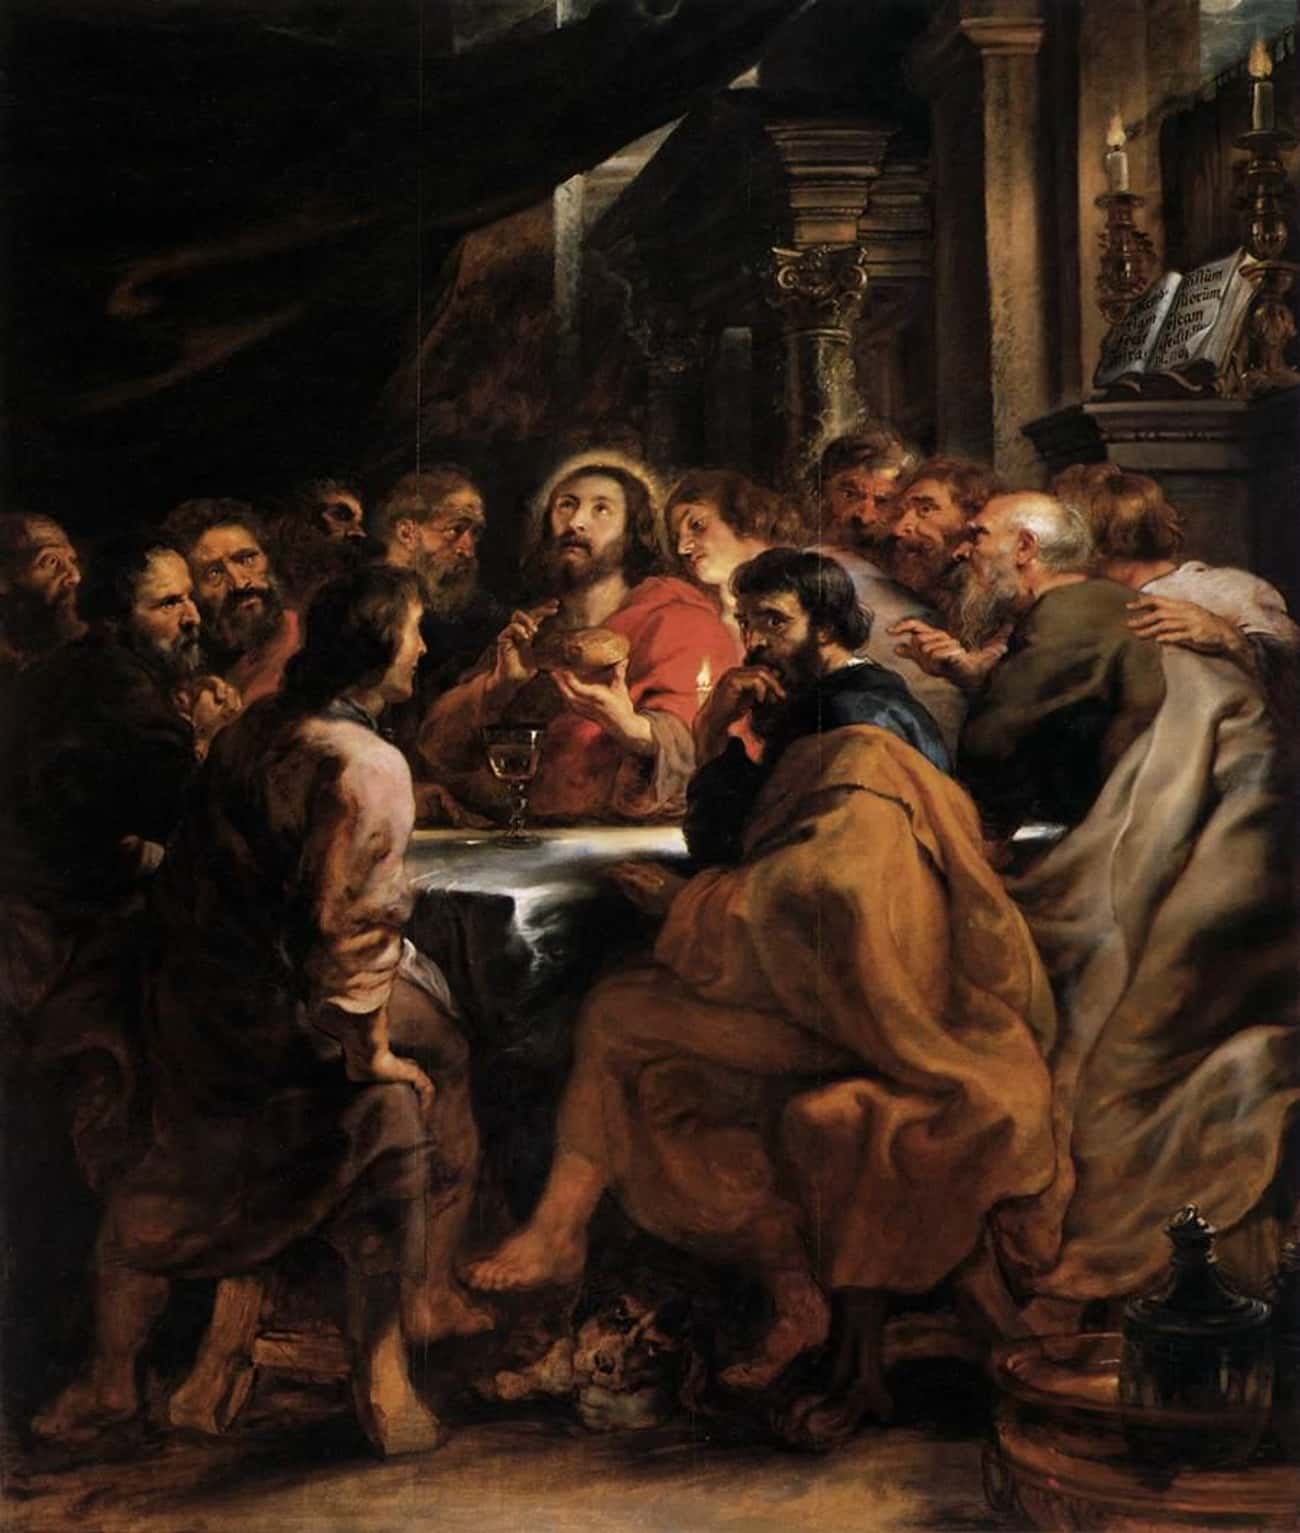 Rubens's Last Supper